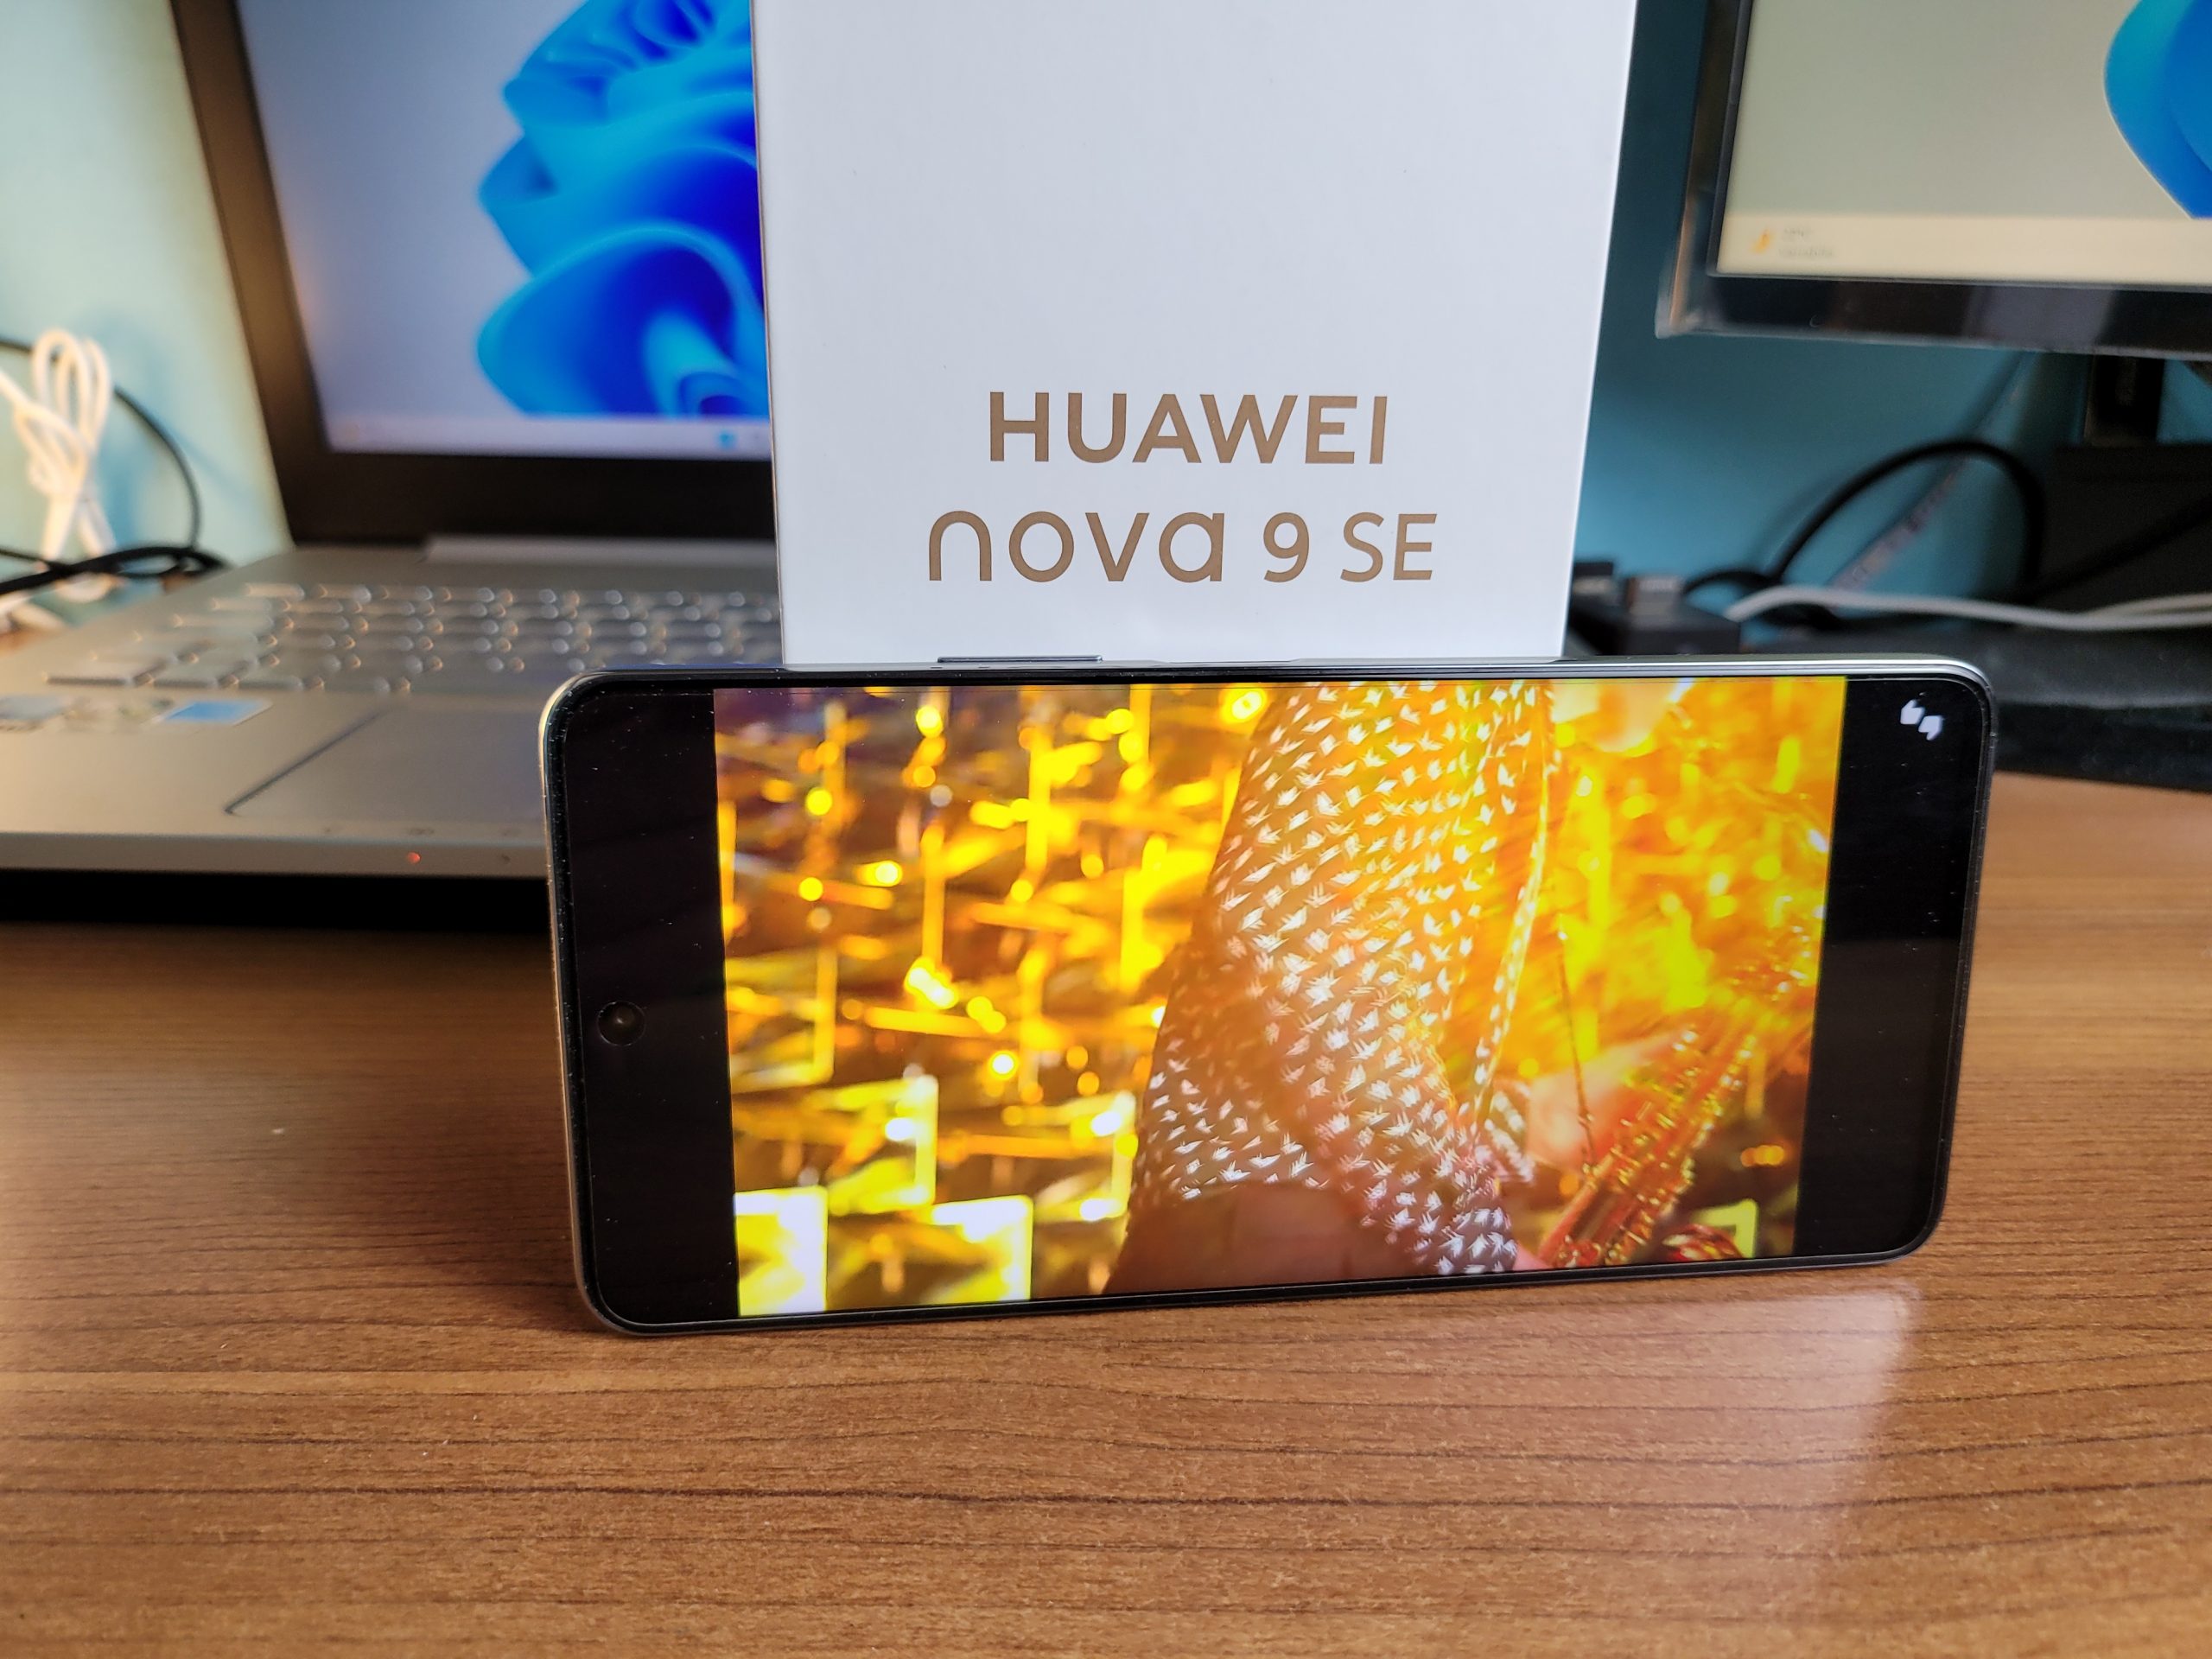 20220513 214927 scaled - Huawei Nova 9 SE recensione